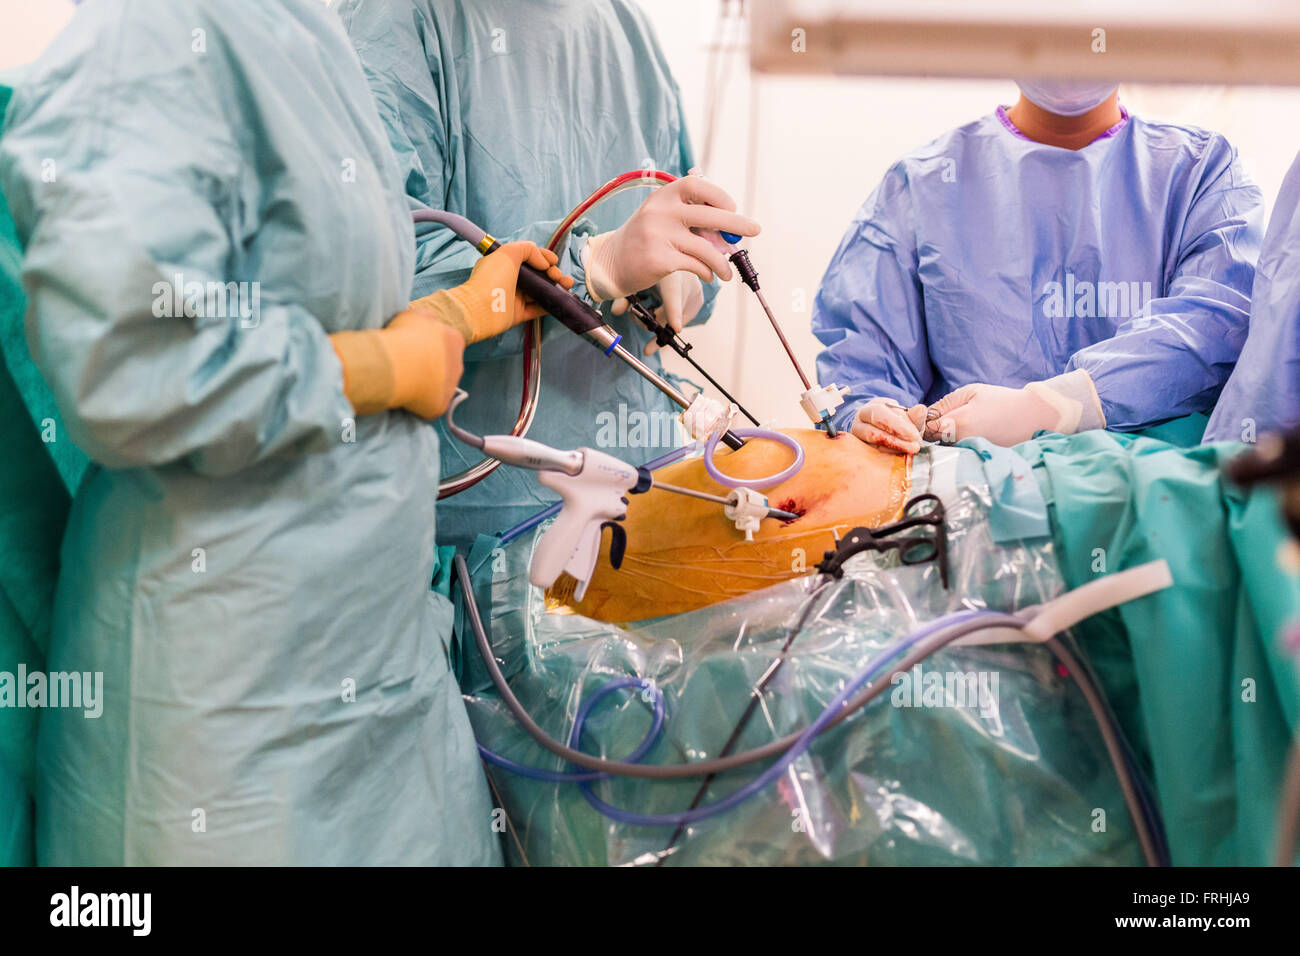 Surgical laparoscopy and hysteroscopy exploration here, treatment of endometriosis. Stock Photo